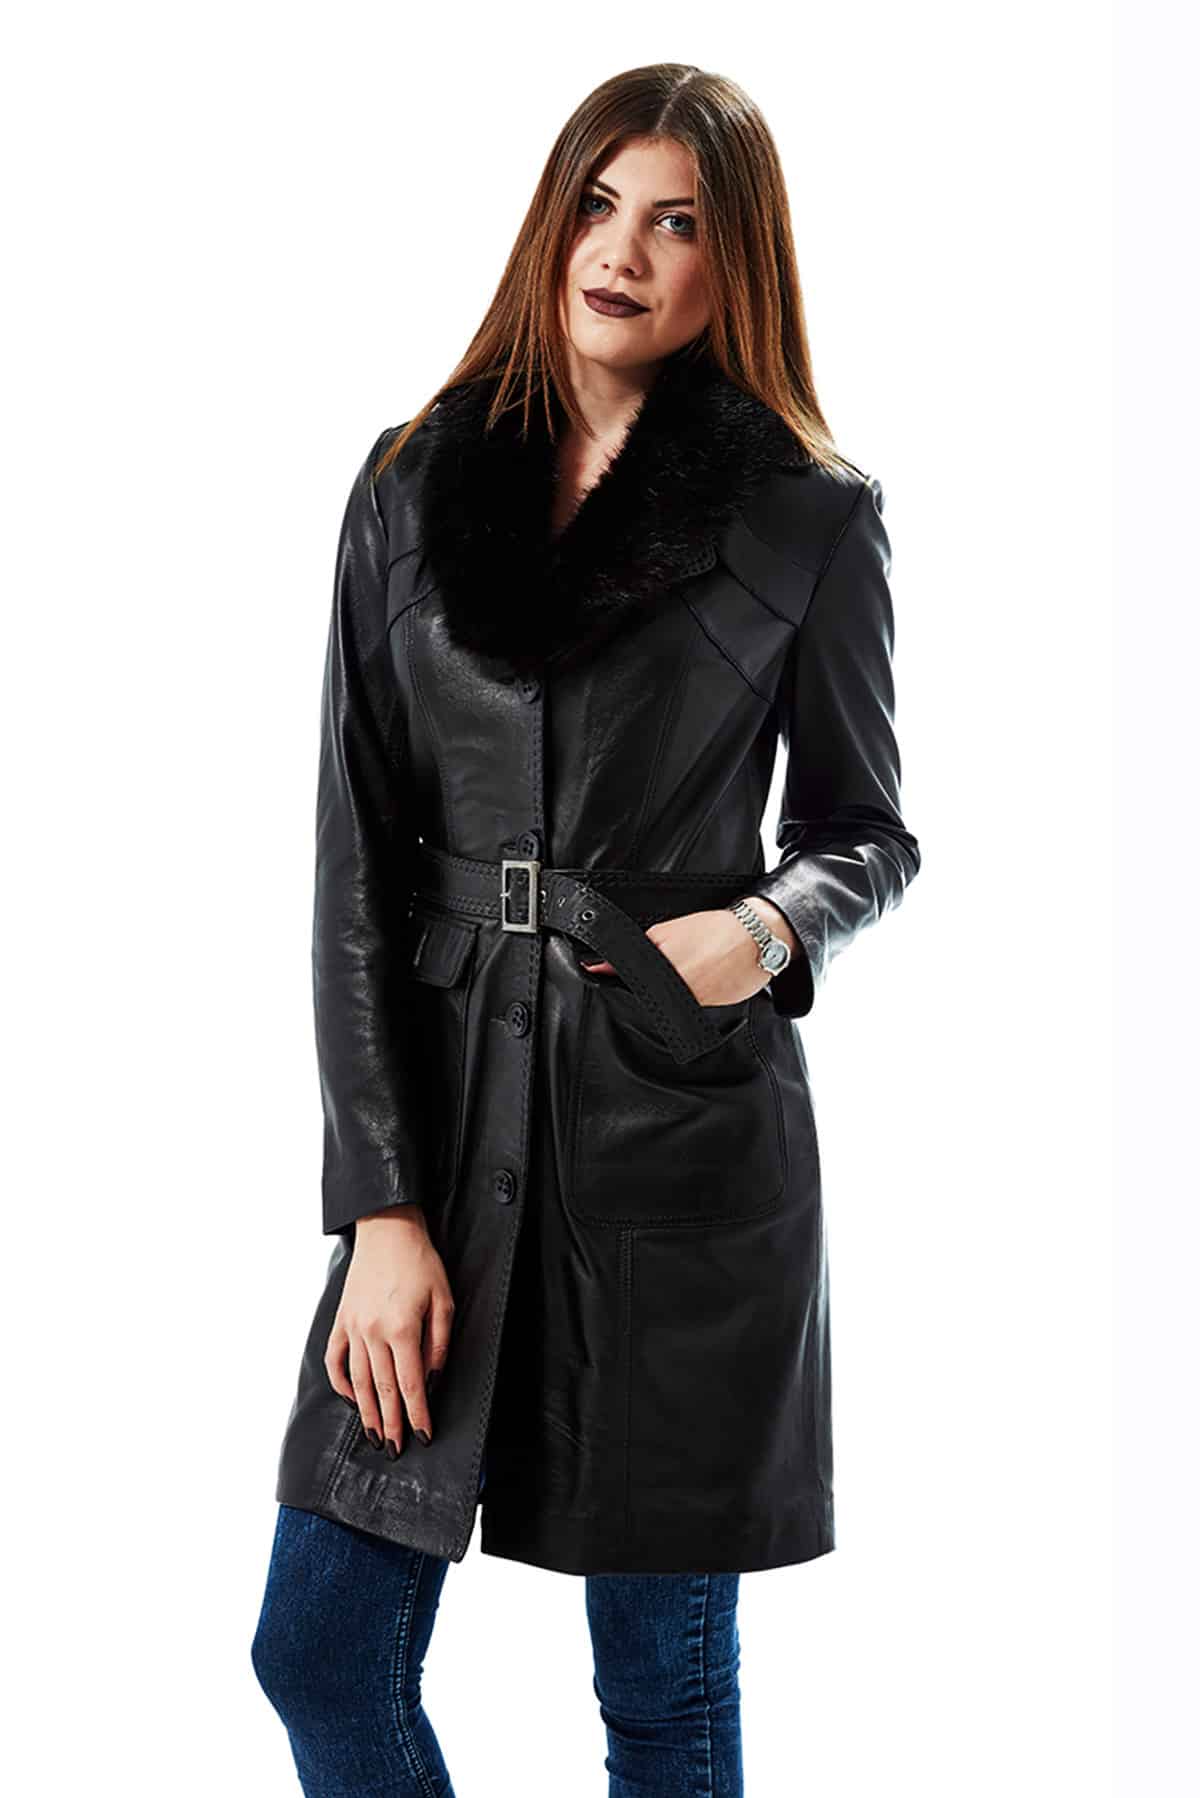 women's 3/4 length winter leather coats